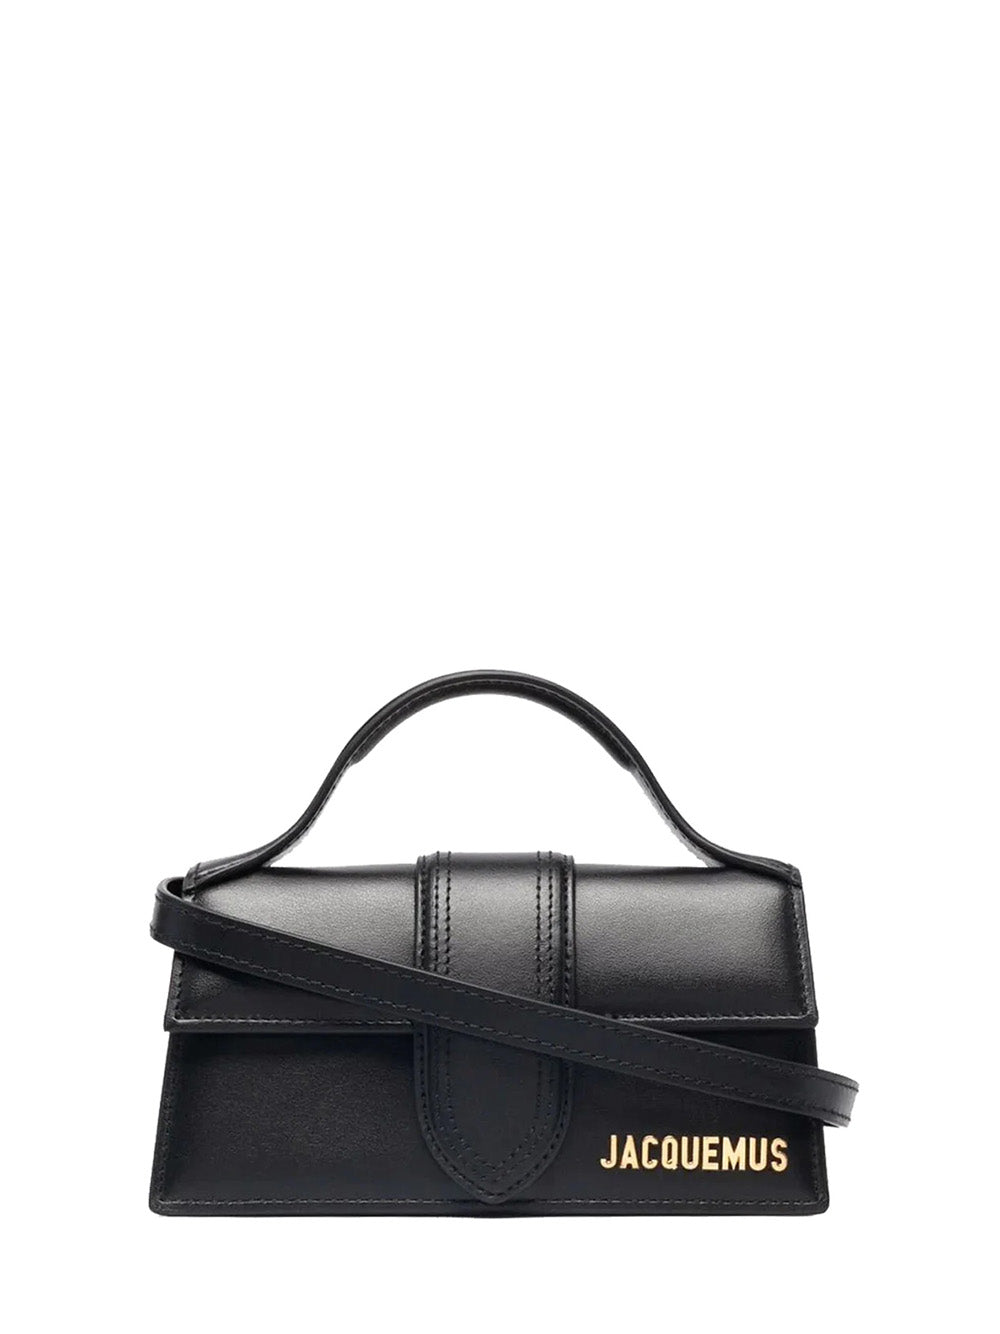     Jacquemus-LeBambino-Black-1